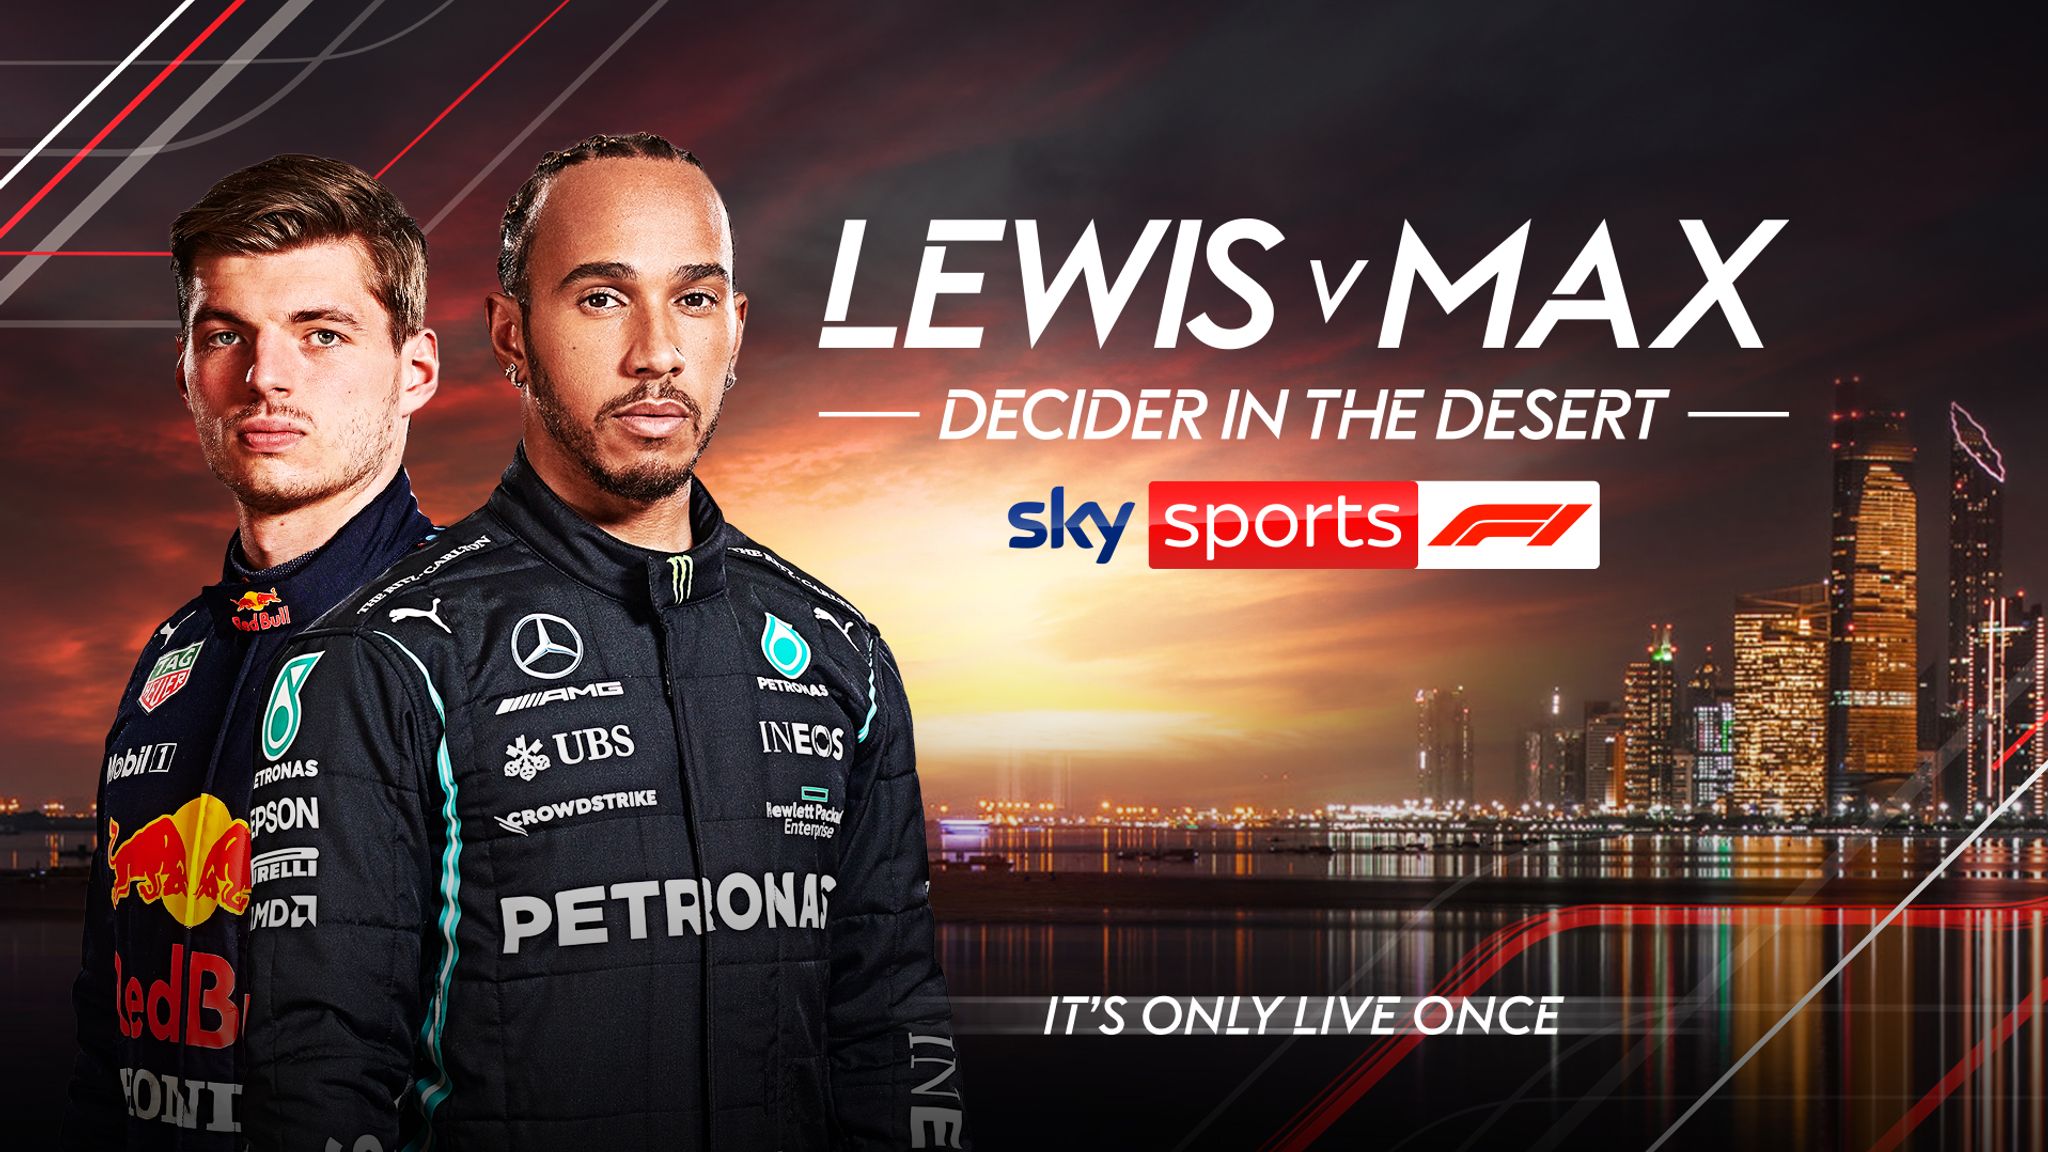 Abu Dhabi GP: watch Lewis Hamilton vs Max Verstappen's F1 title decider live on Sky Sports | F1 News